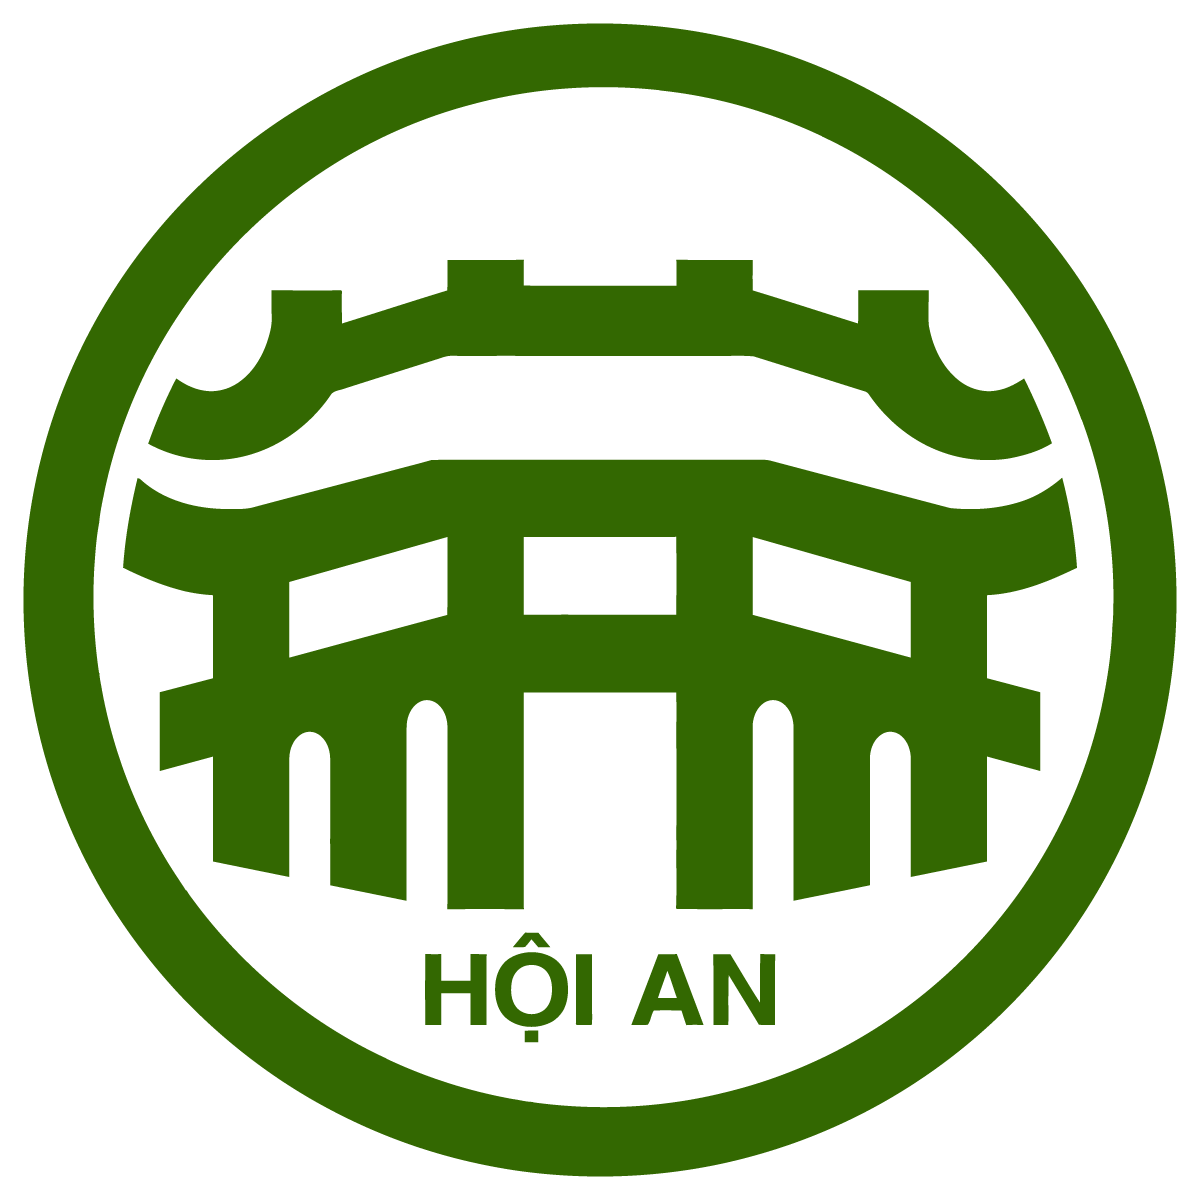 Logo Thanh Pho Hoi An